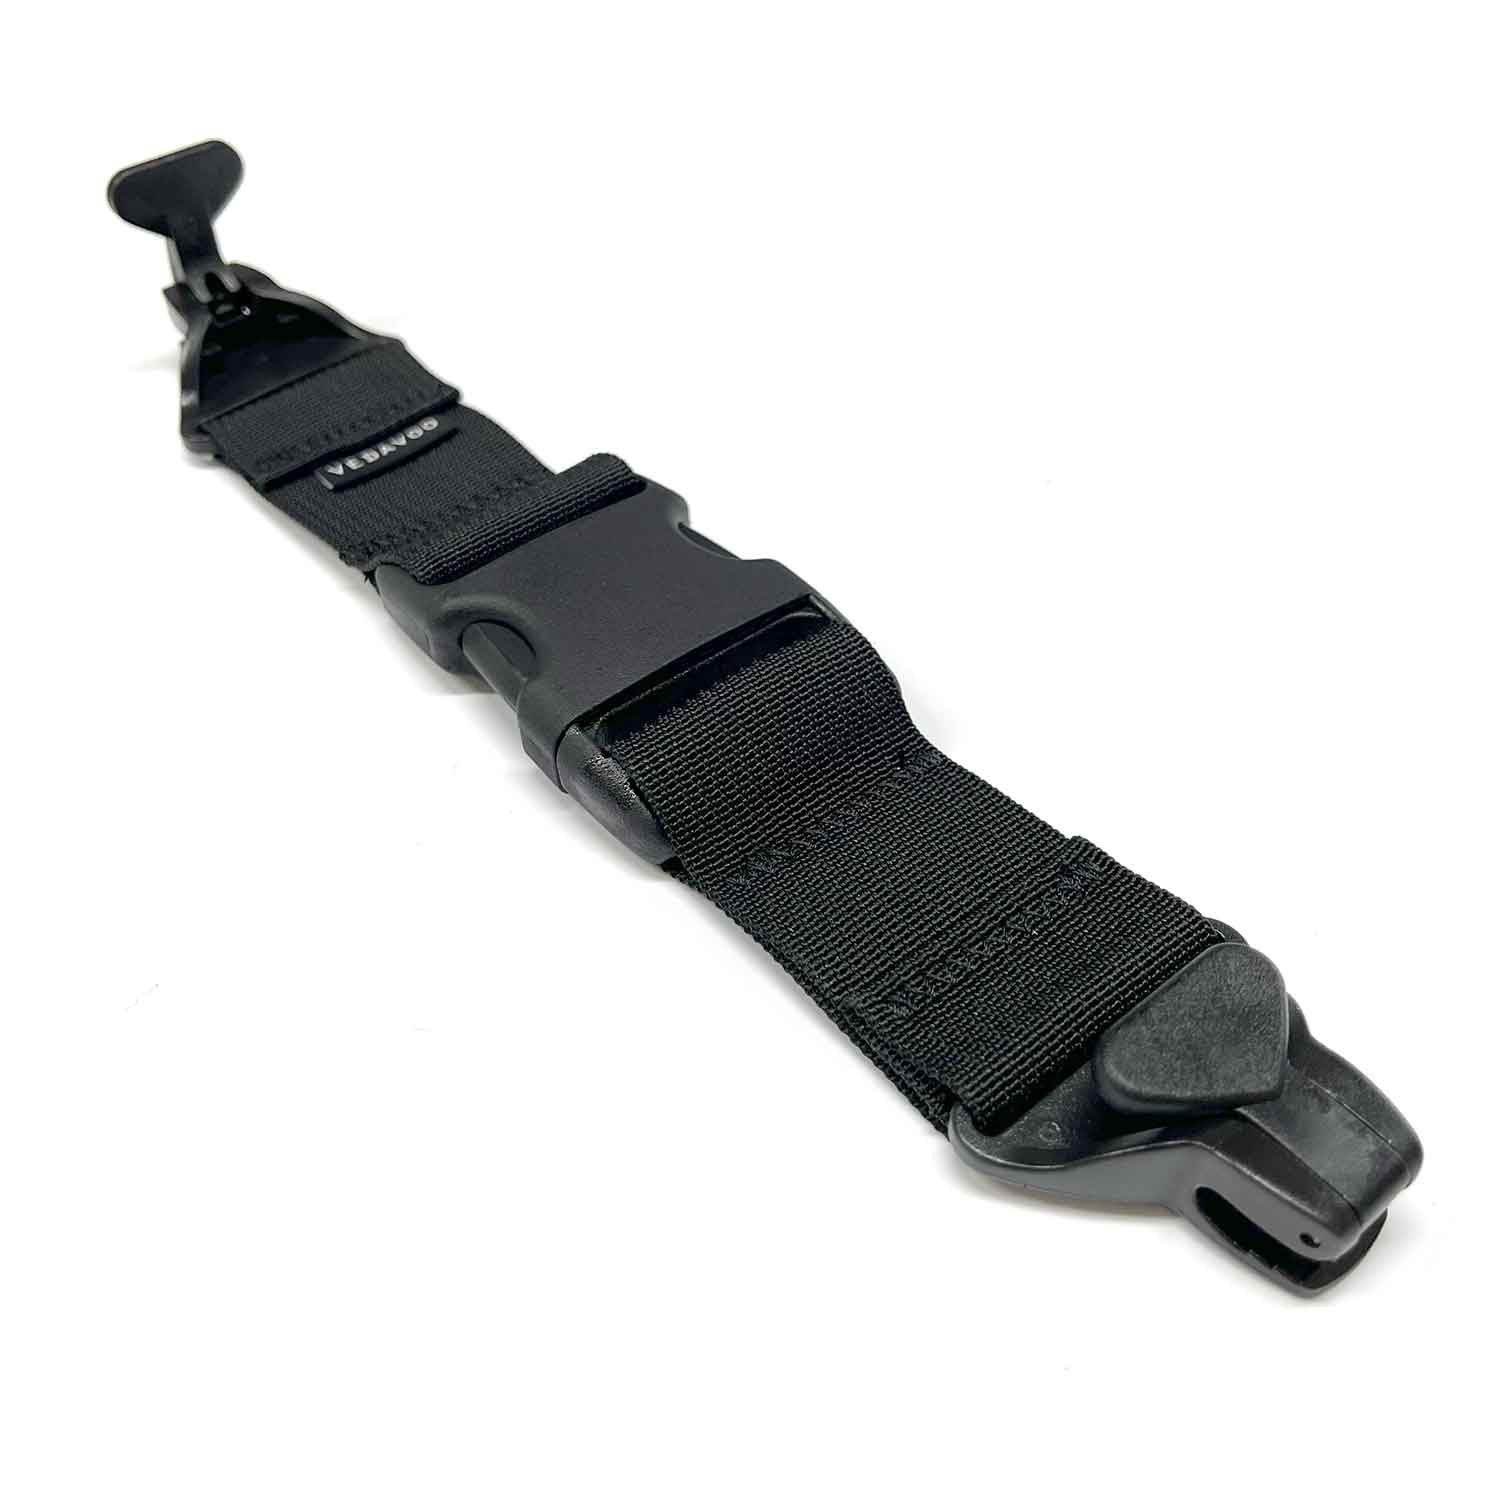 cam buckle strap – Straps To Go